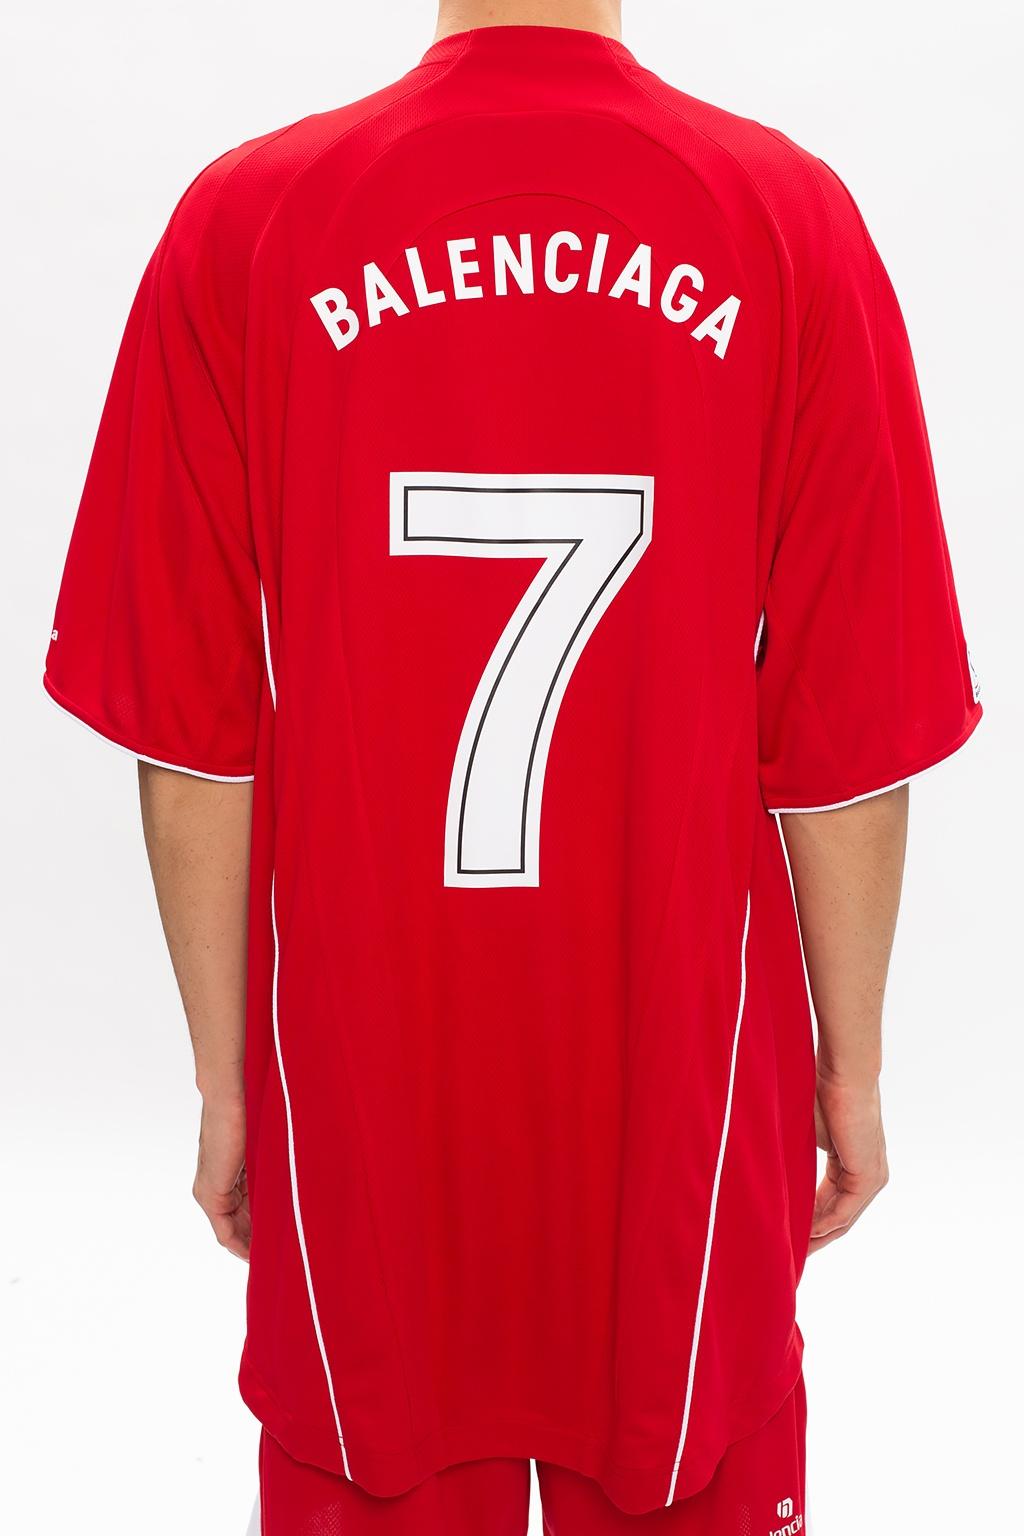 Balenciaga Oversize T-shirt Red for Men - Lyst